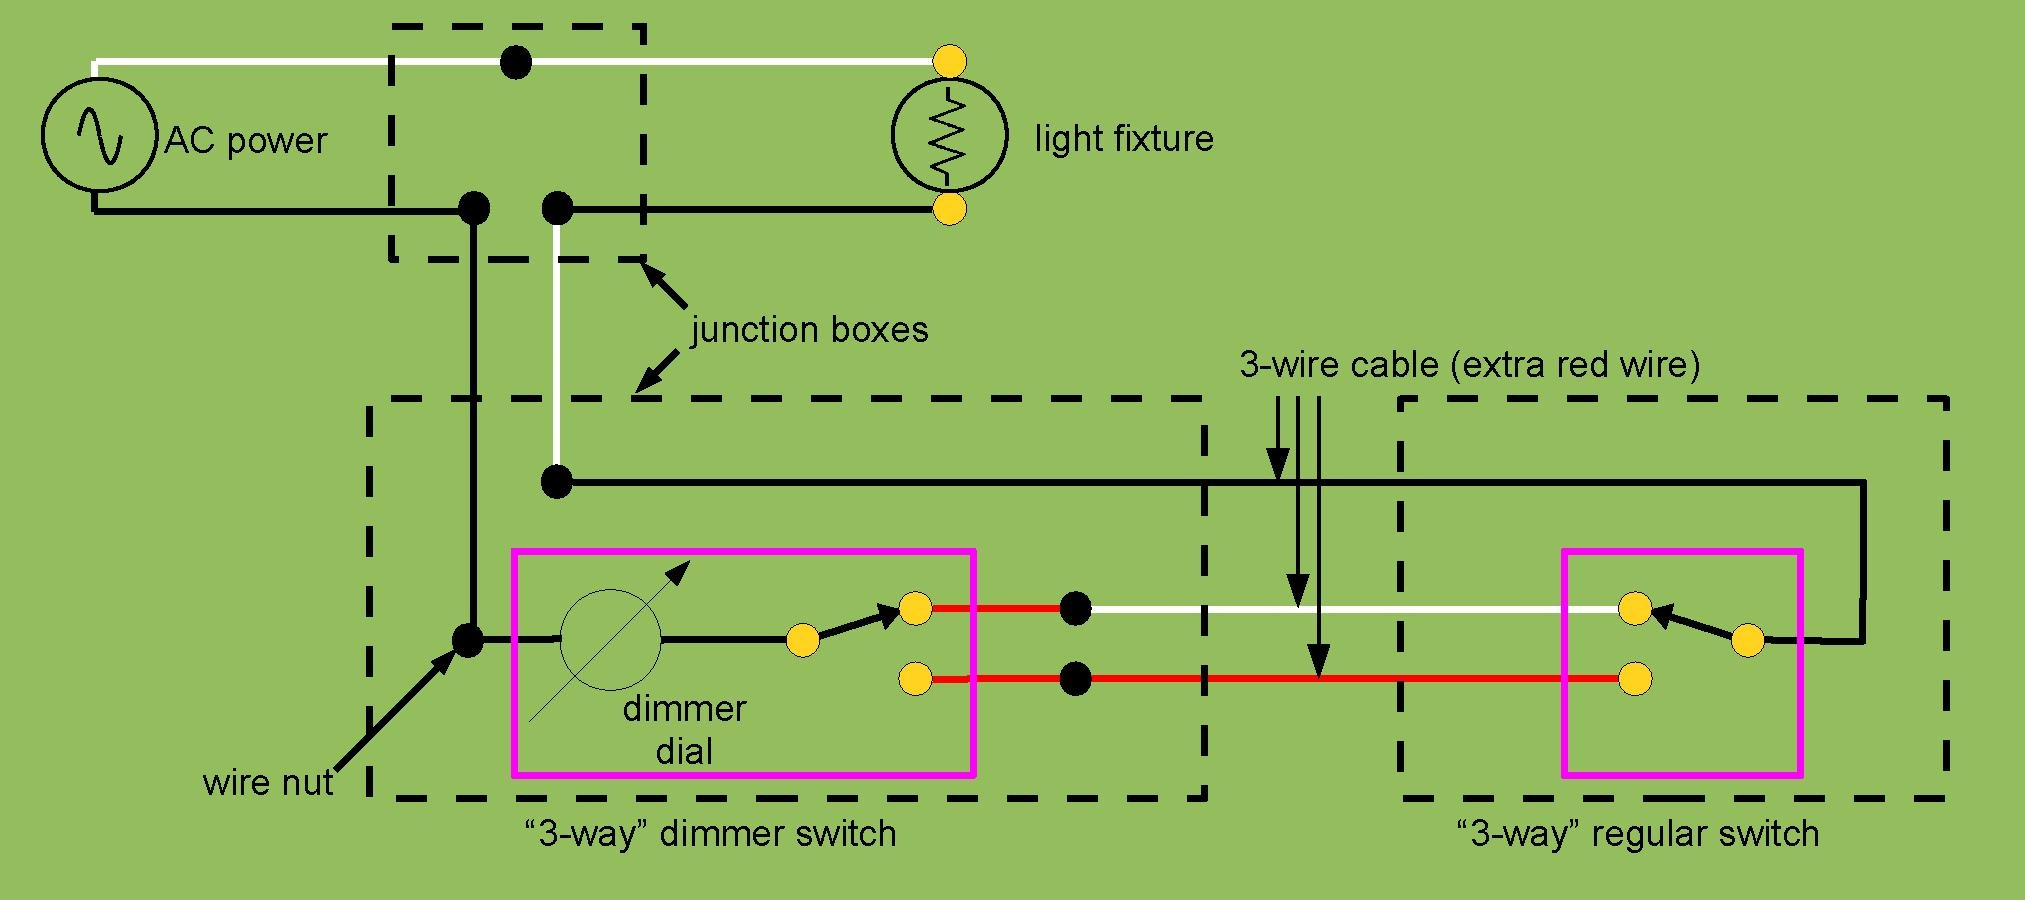 File:3-Way Dimmer Switch Wiring.pdf - Wikimedia Commons - 3 Way Dimmer Switches Wiring Diagram